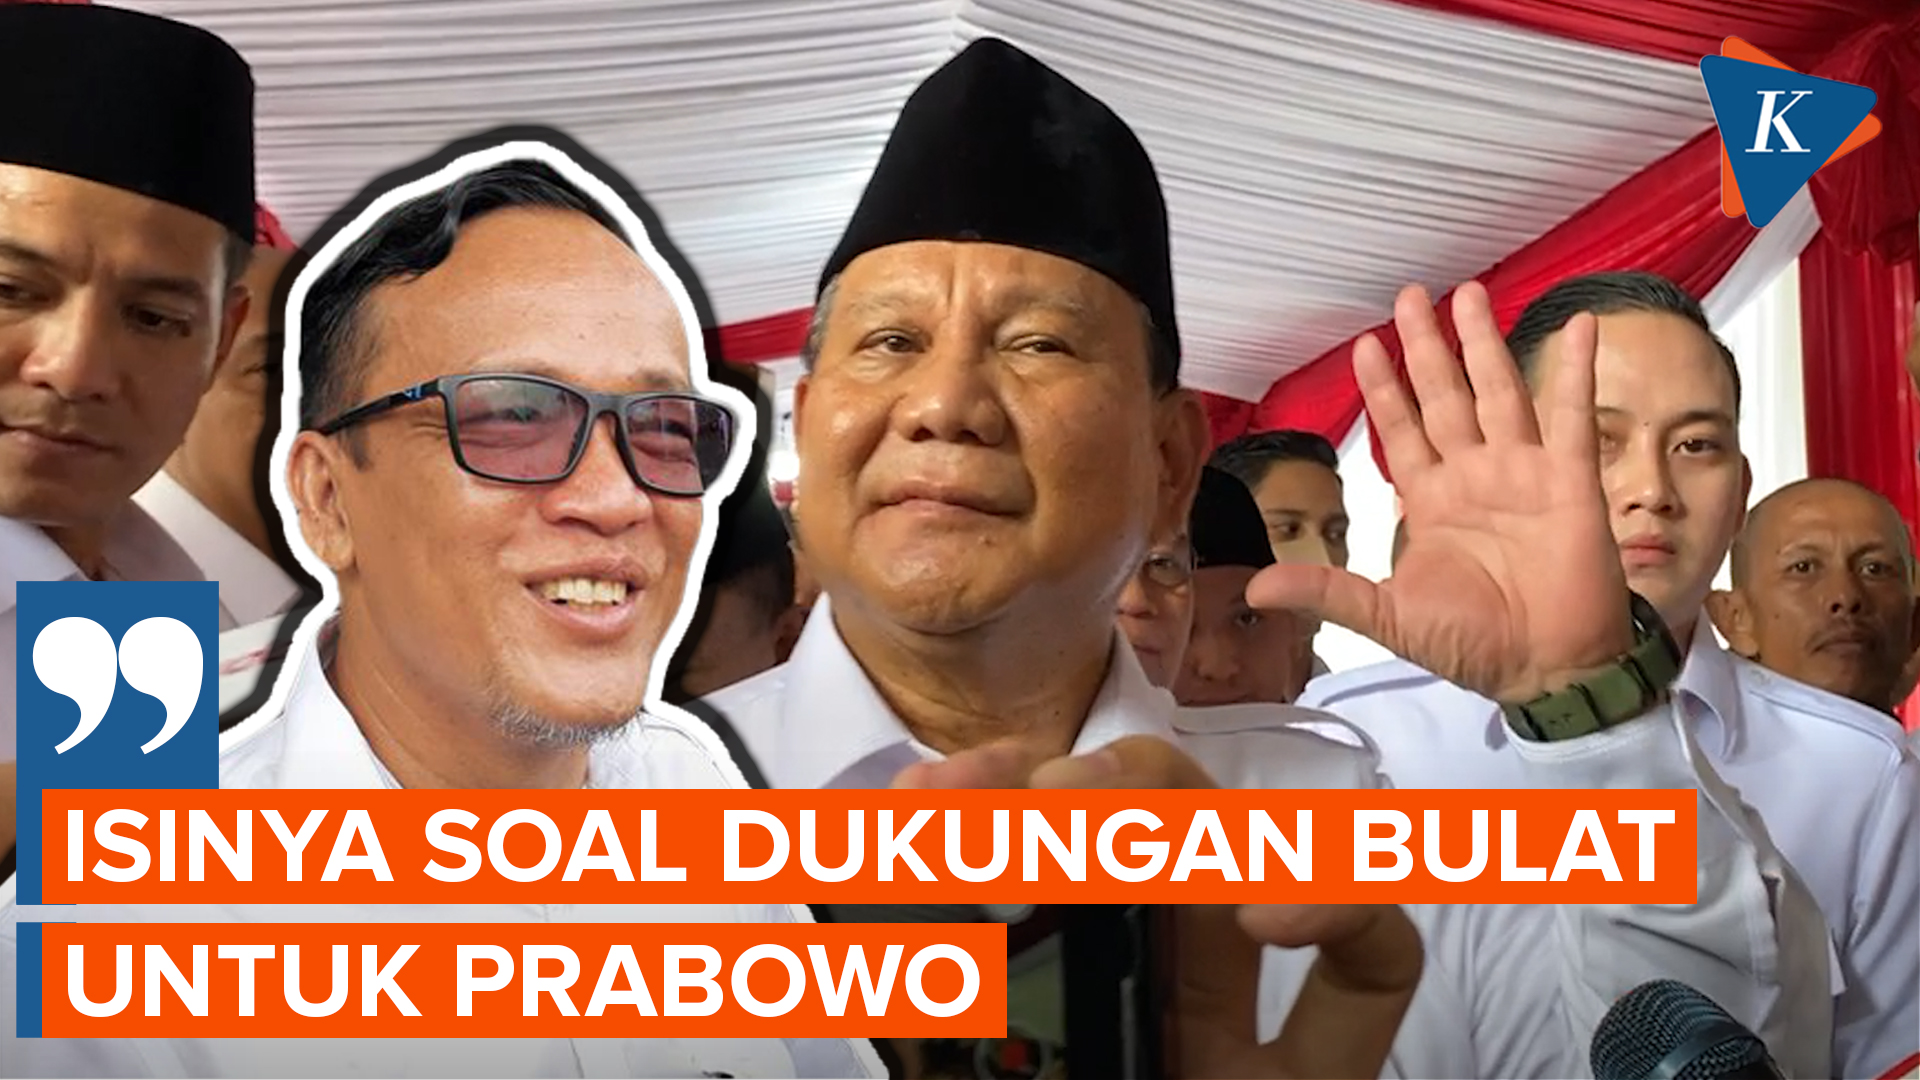 Relawan Jokowi Mania Bertandang ke Rumah Prabowo Sore Ini